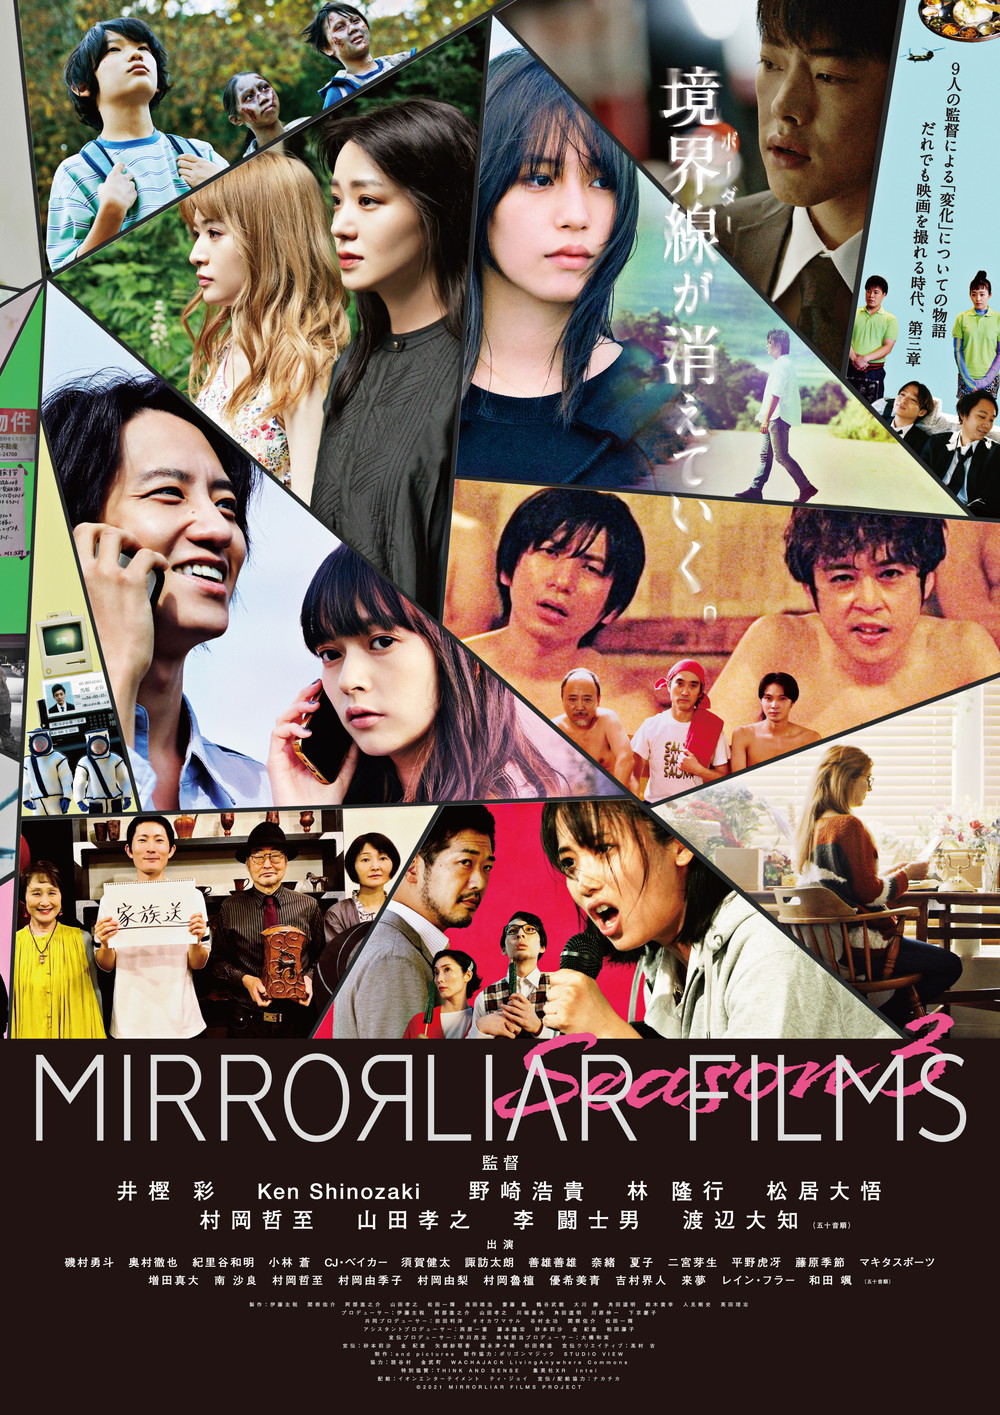 MLF_S3『MIRRORLIAR-FILMS-Season3』本ポスター